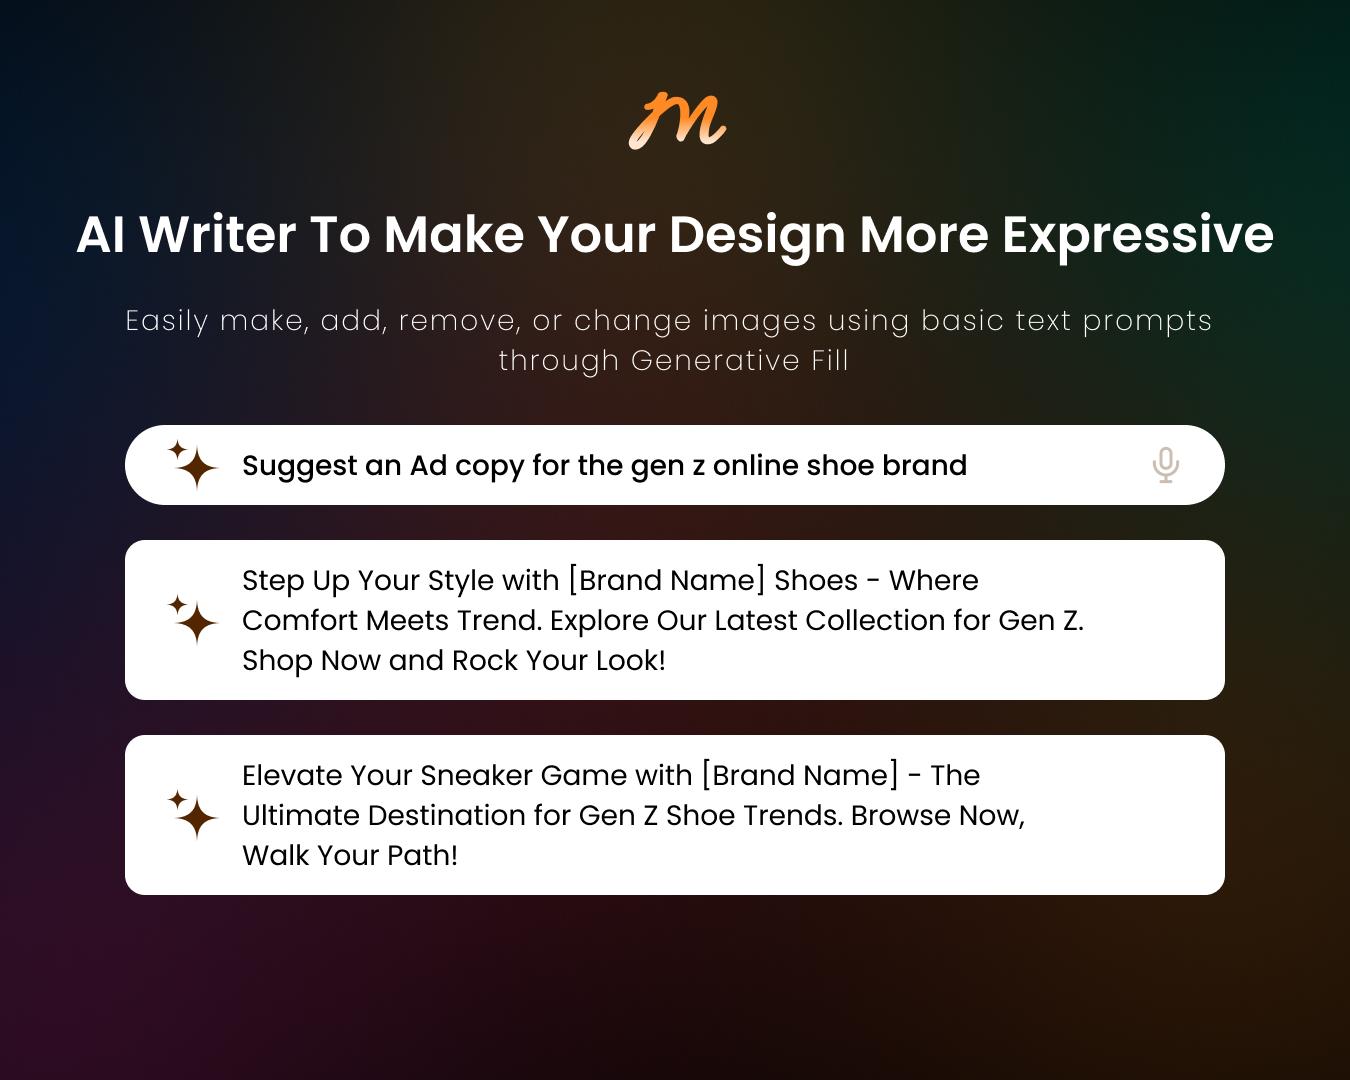 AI writer to make your design more expressive